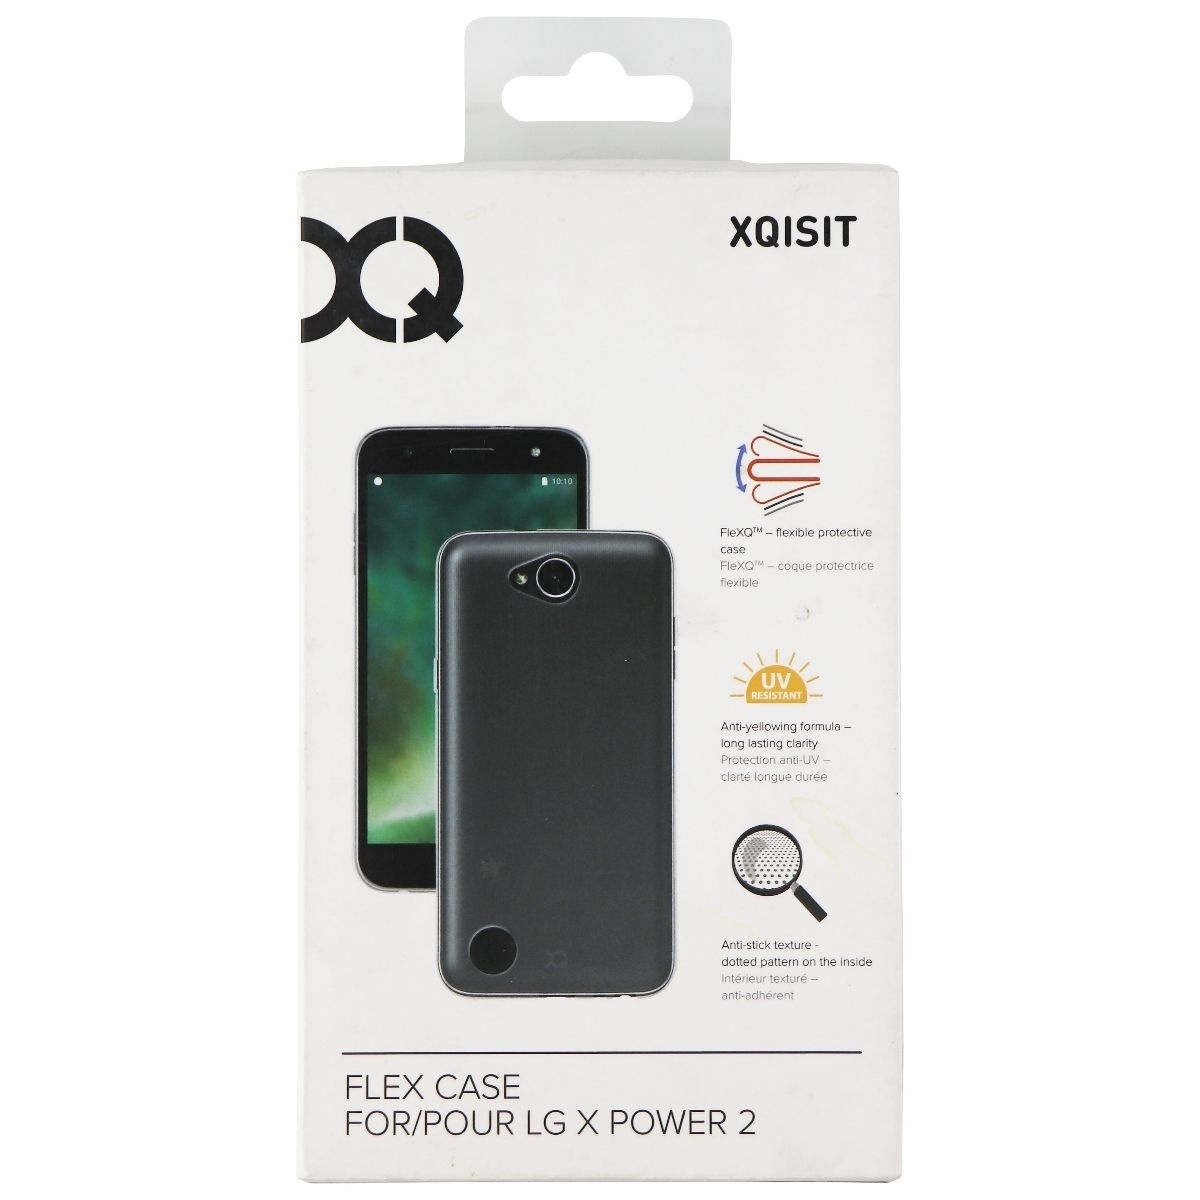 Xqisit Slim Gel Flex Case For LG X Power 2 Smartphones - Clear